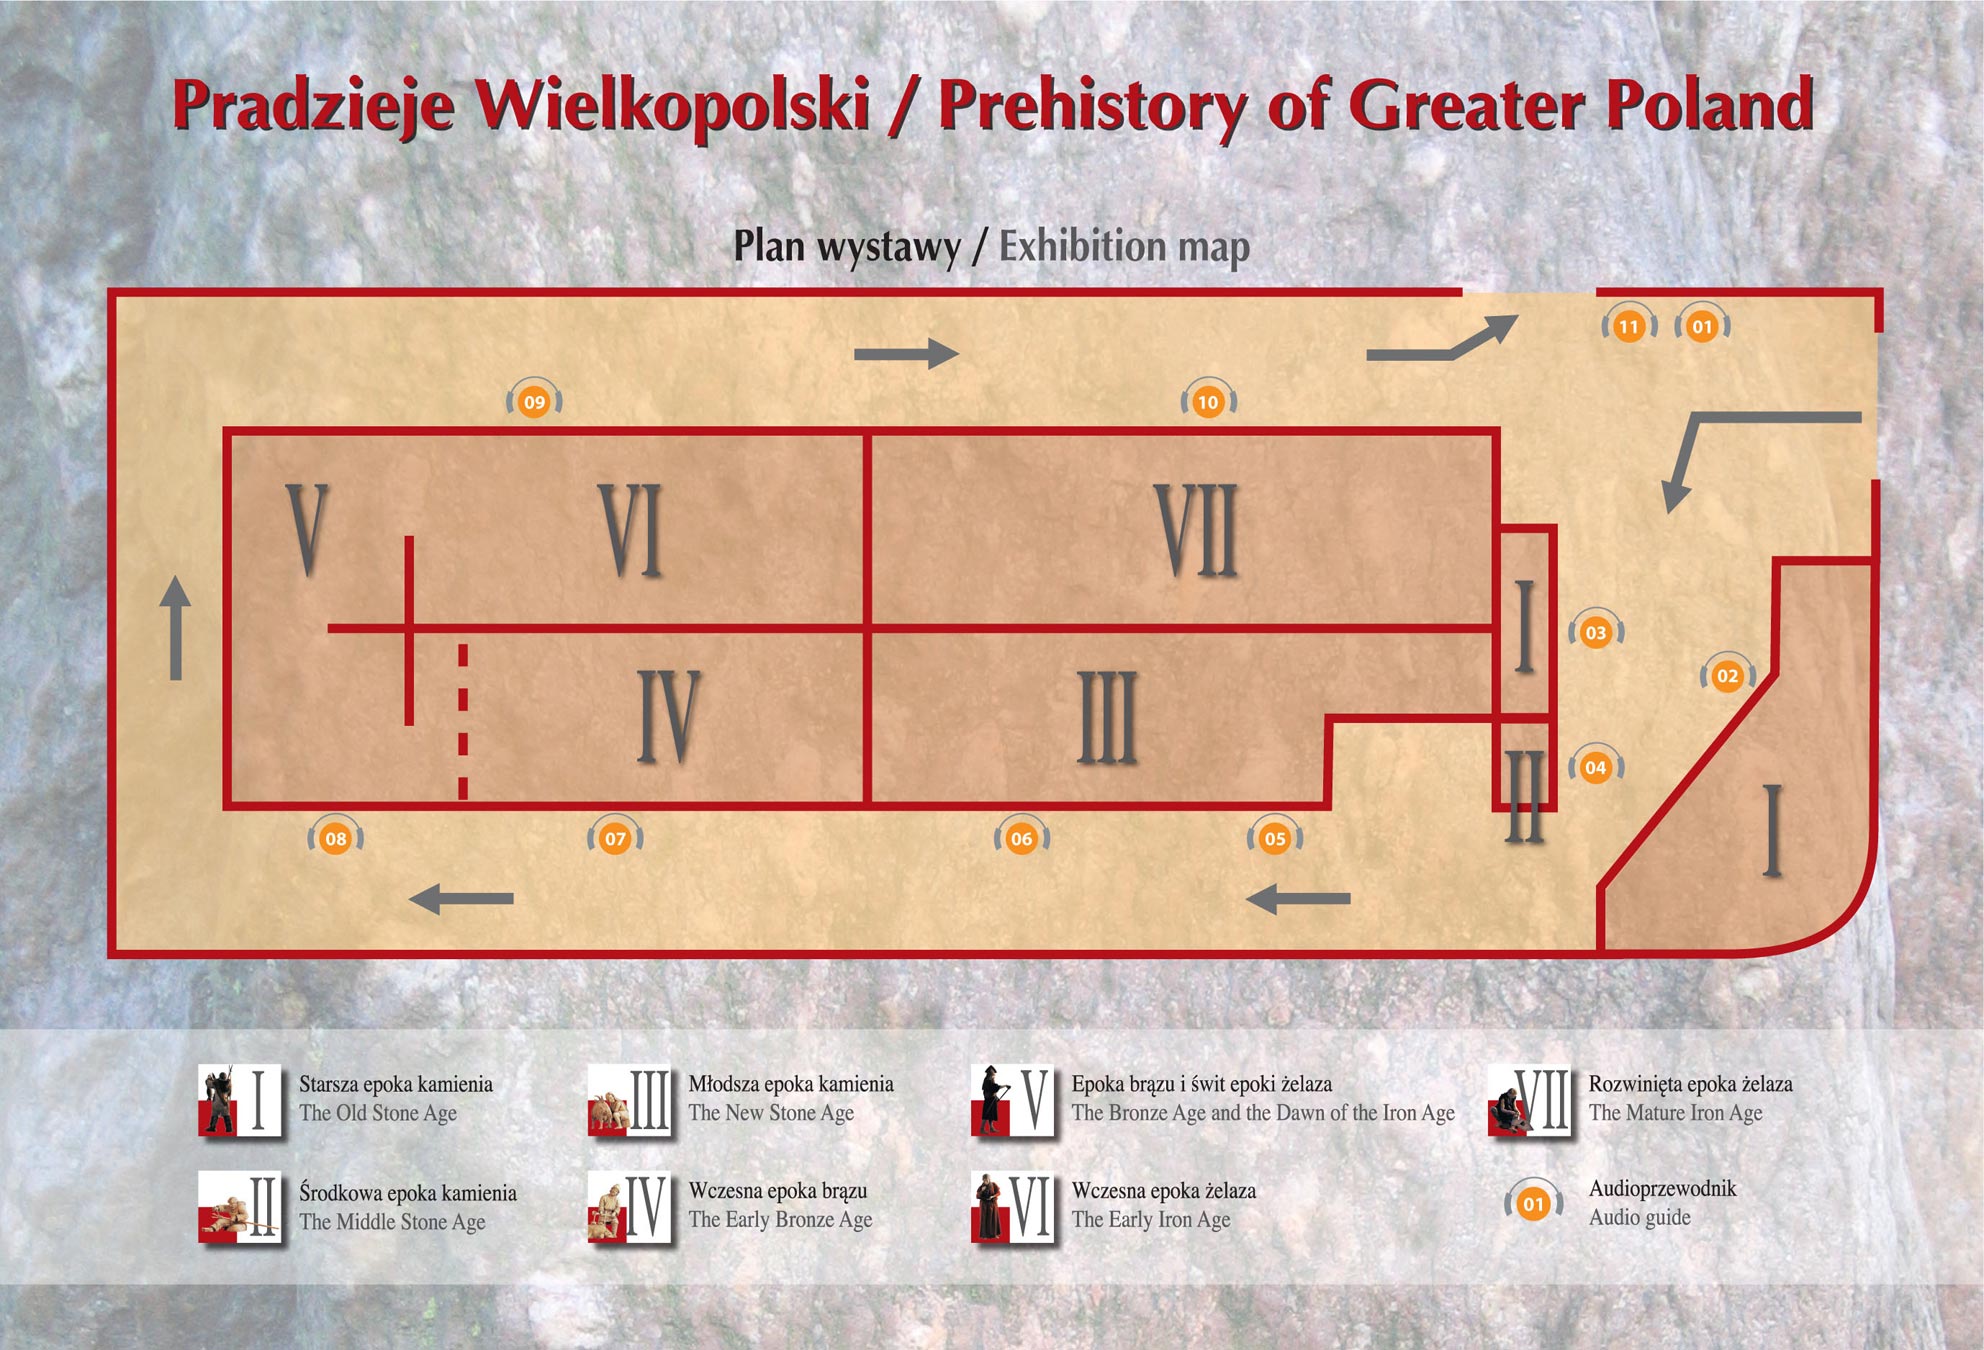 Prehistory of Wielkopolska (Greater Poland) - Exhibition plan